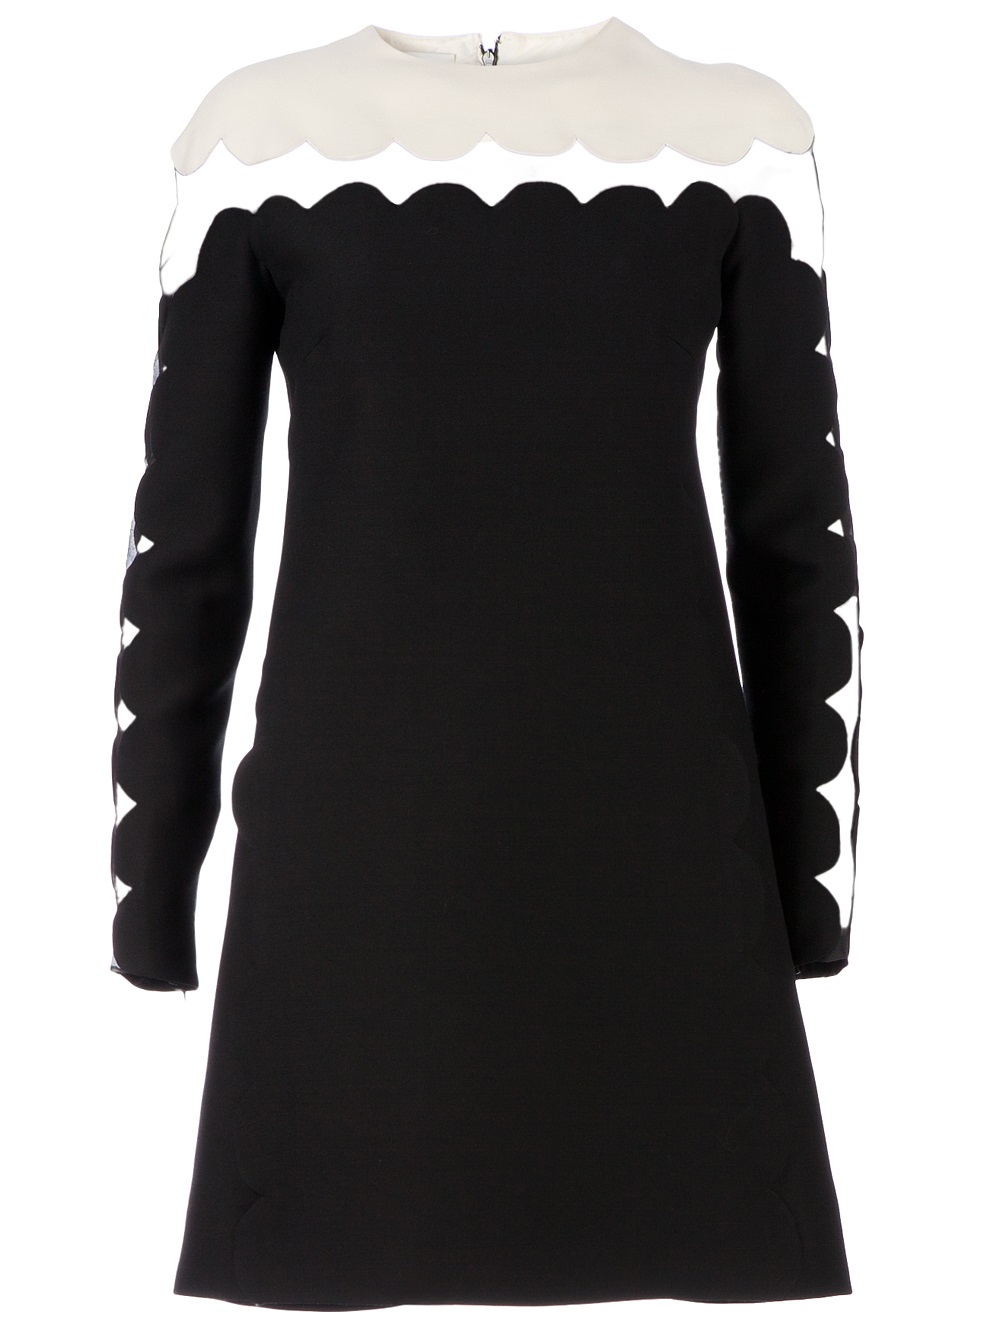 Lyst - Valentino Scalloped Sheer Panel Dress in Black